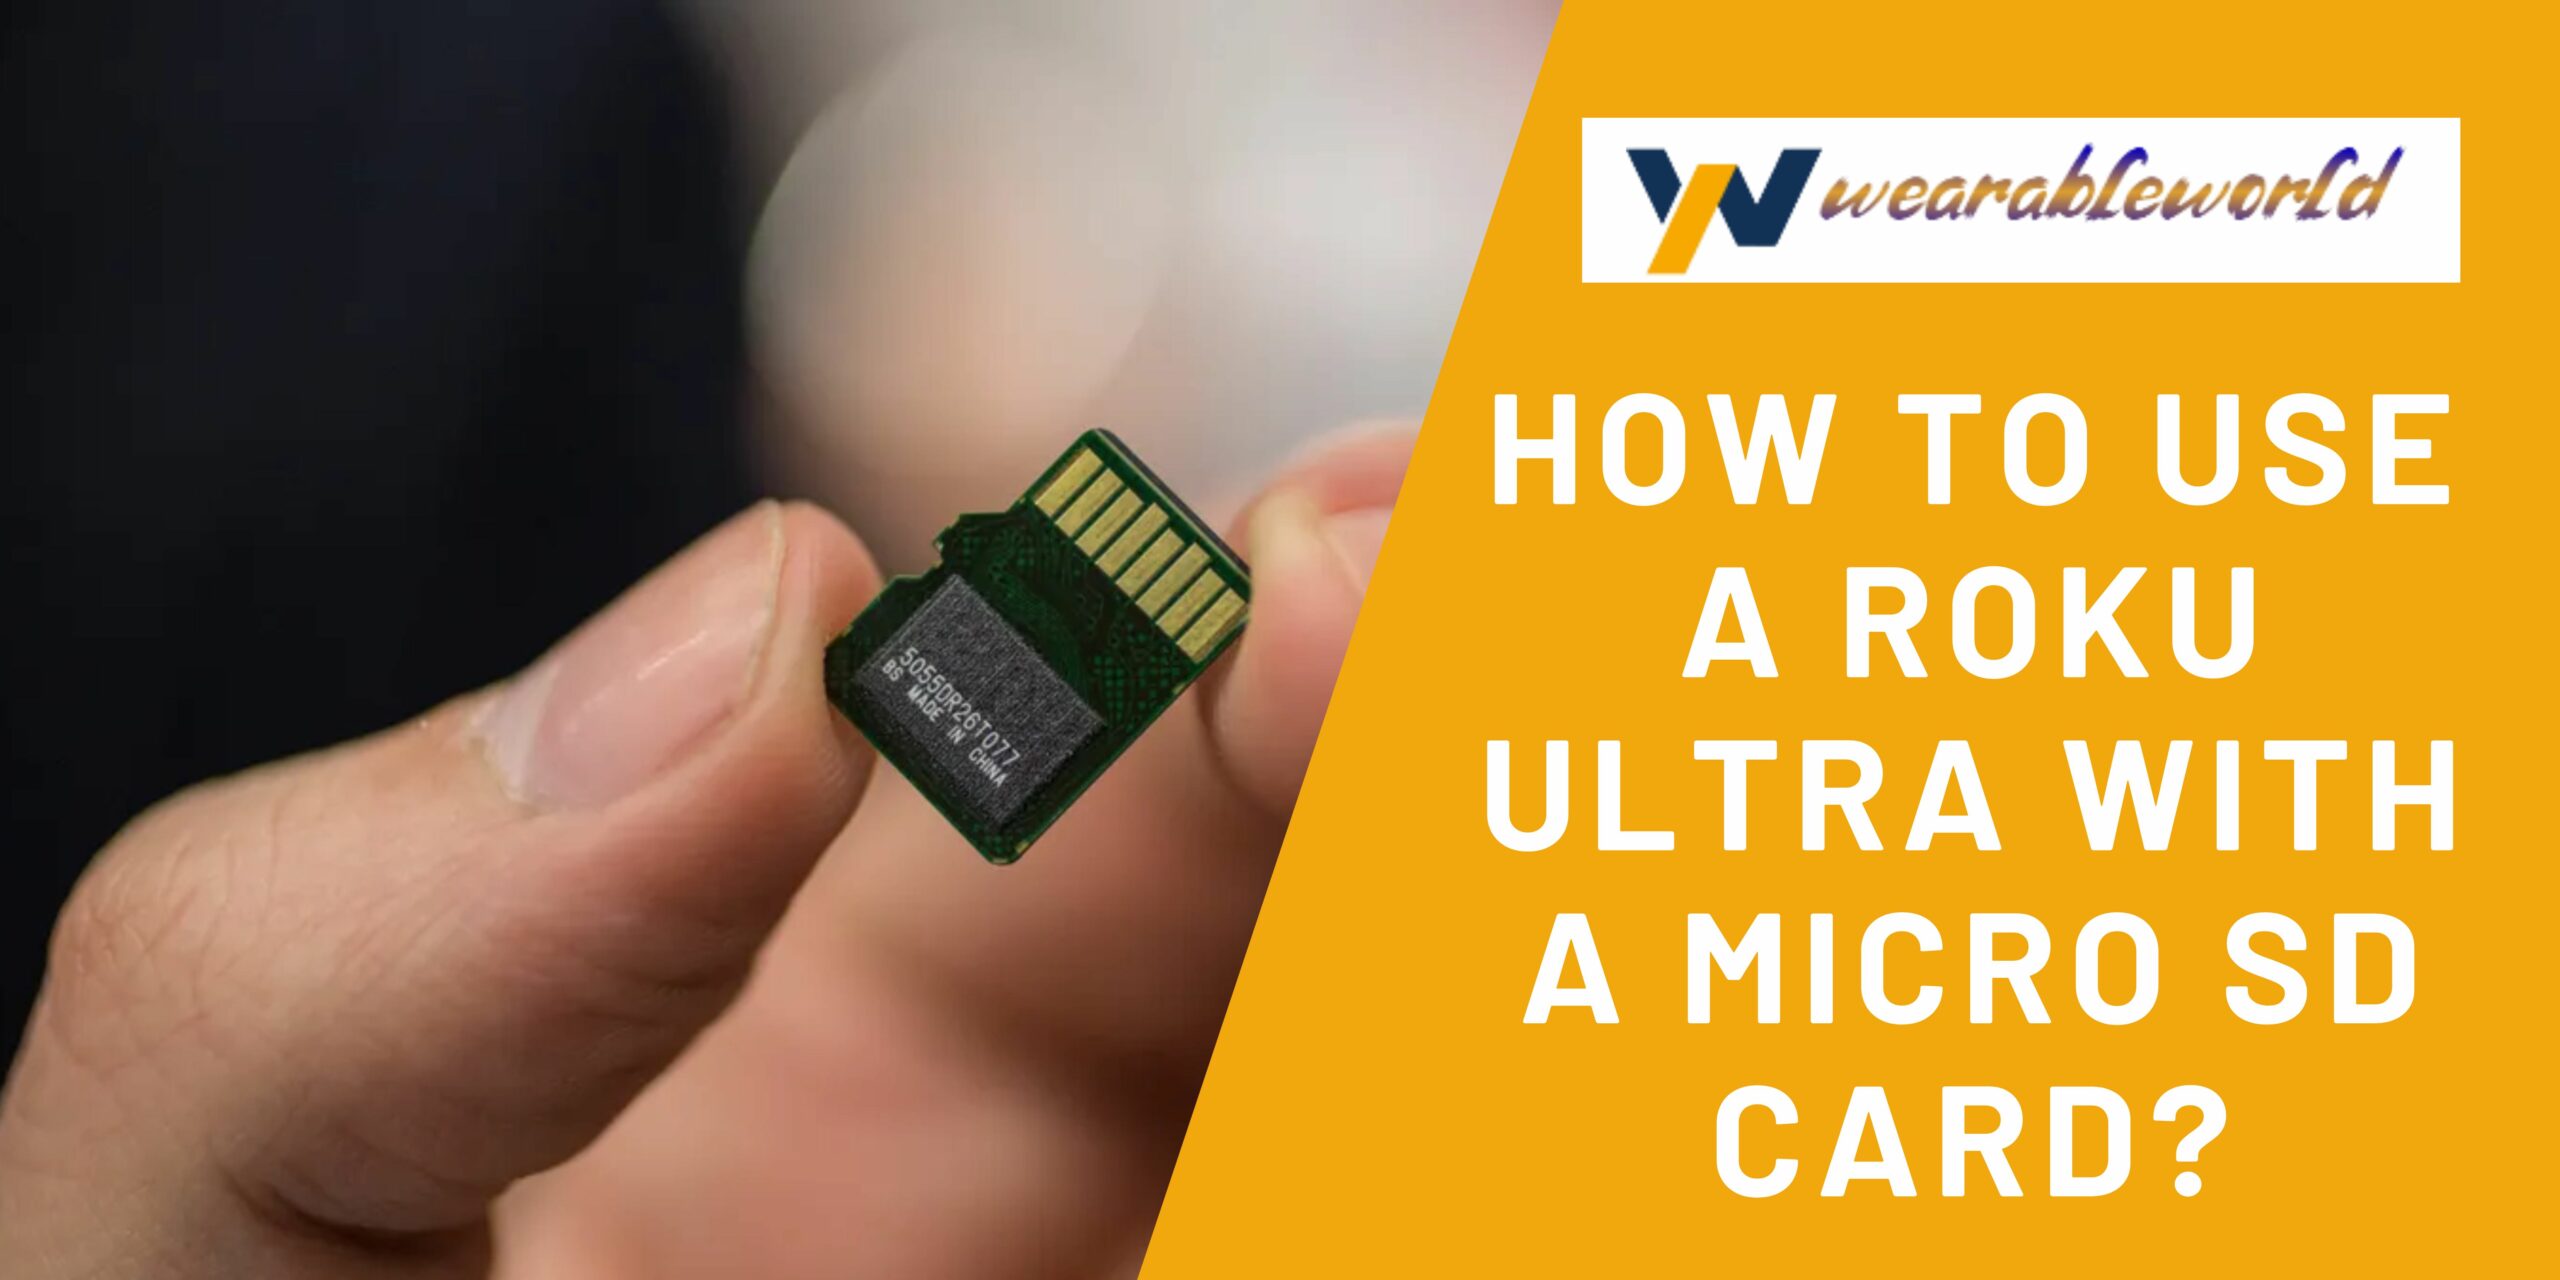 Use a Roku Ultra with a Micro SD Card